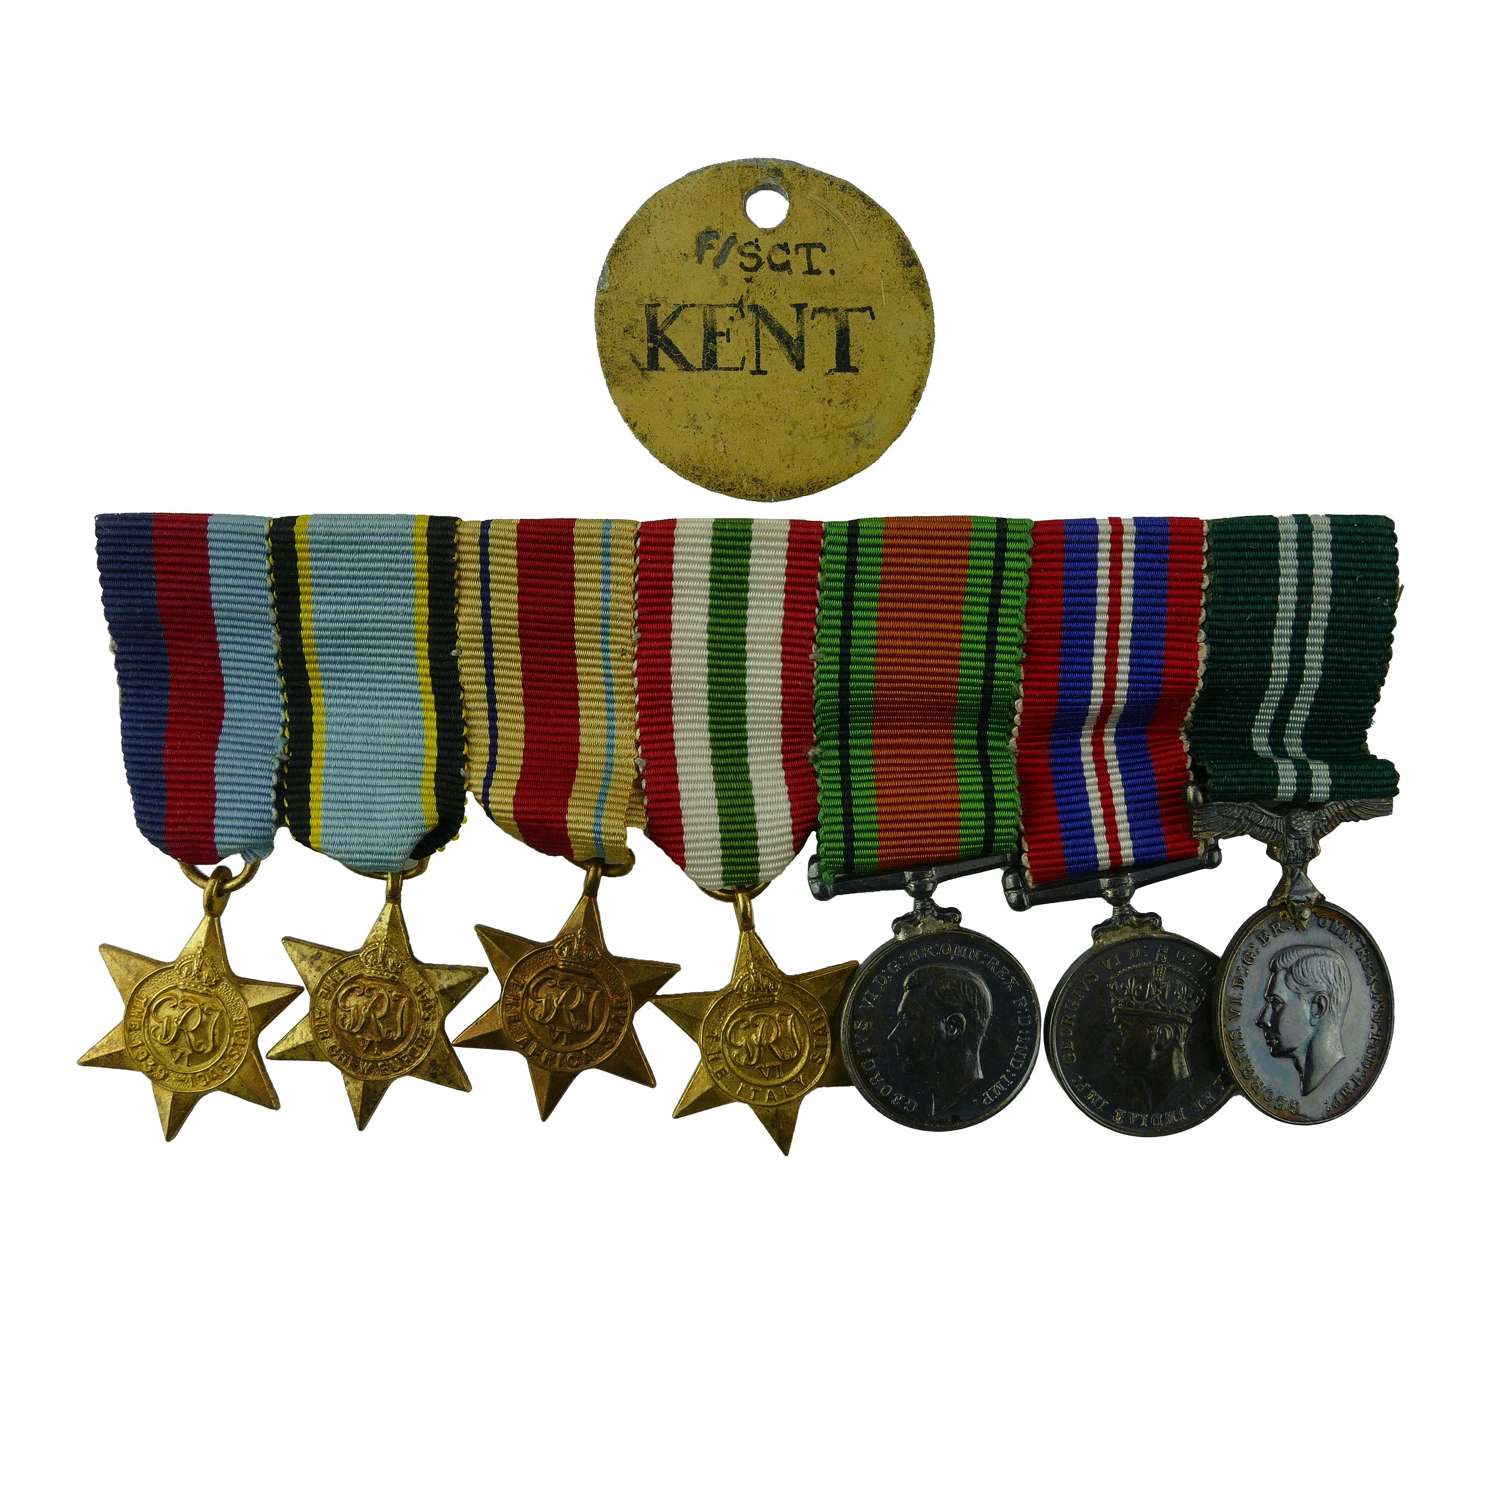 Miniature medals & tag to F/Sgt. Kent